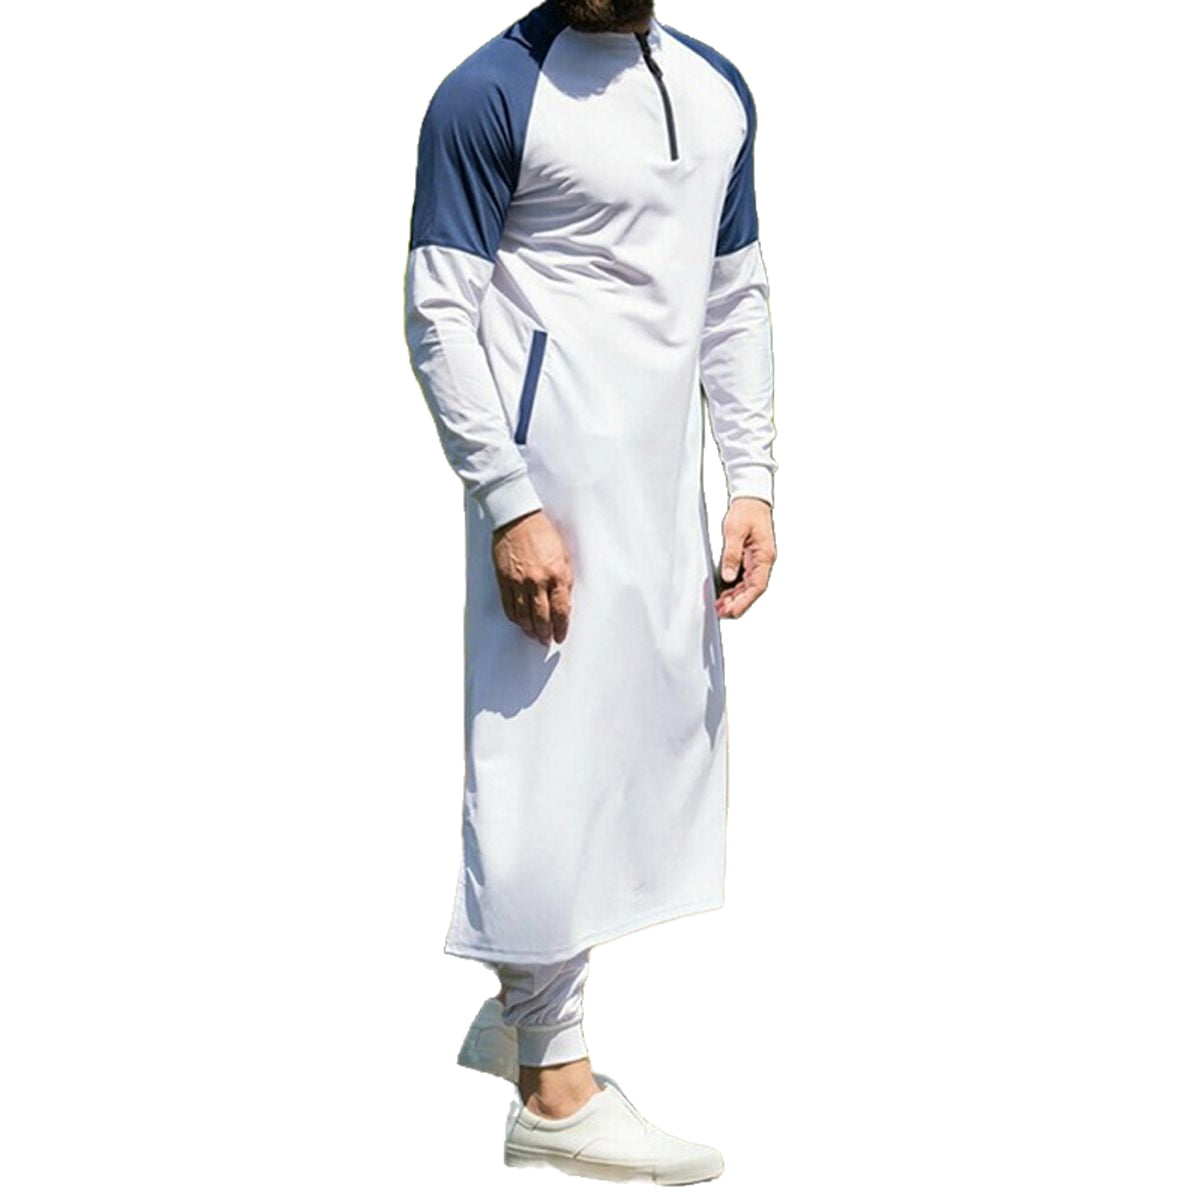 NEW Mens muslim jubbah THE MAN designer polo shirt style thobe white navy black 